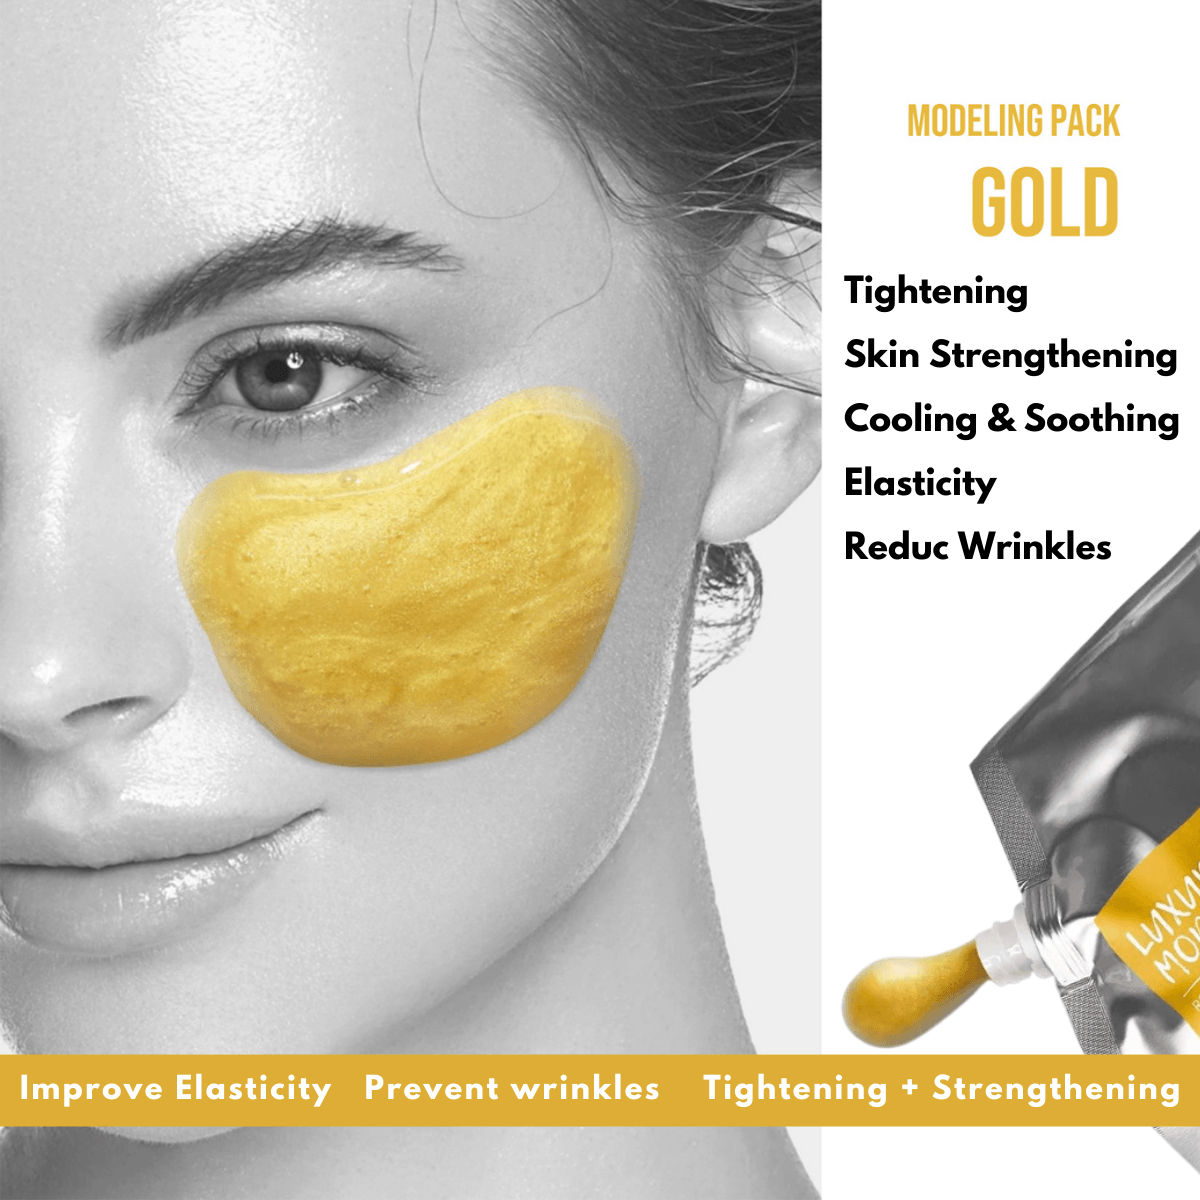 Hydro Jelly Modeling Mask - Gold - Dermabell - Ushops - Korean Skin Care, Gel Modeling Mask, Professional skincare